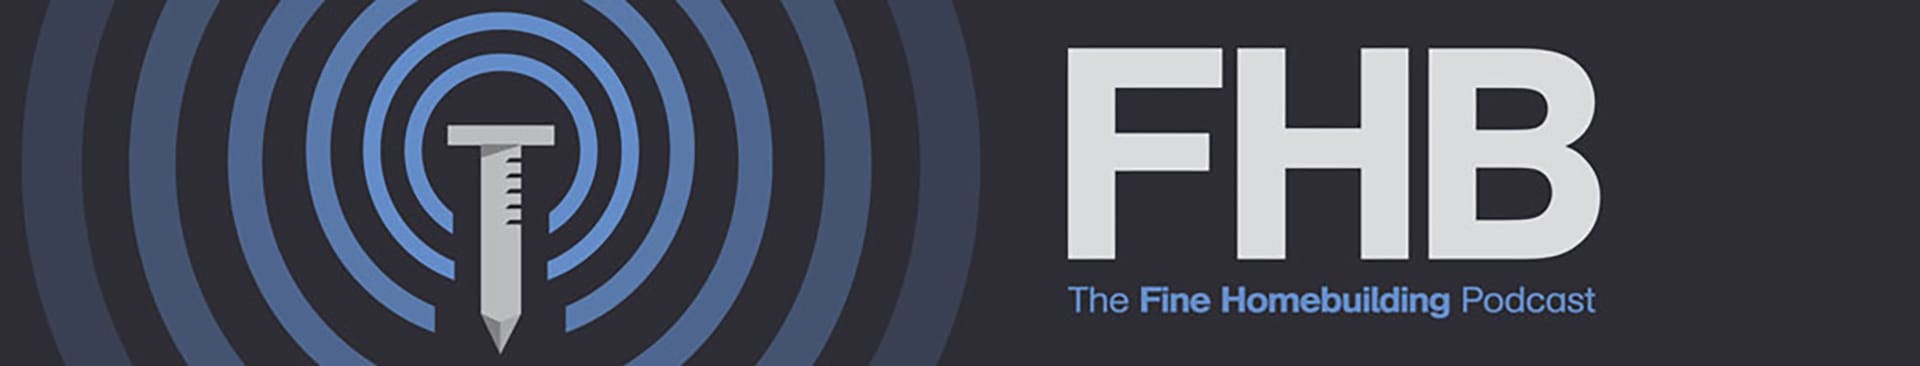 Fine Homebuilding Podcast logo